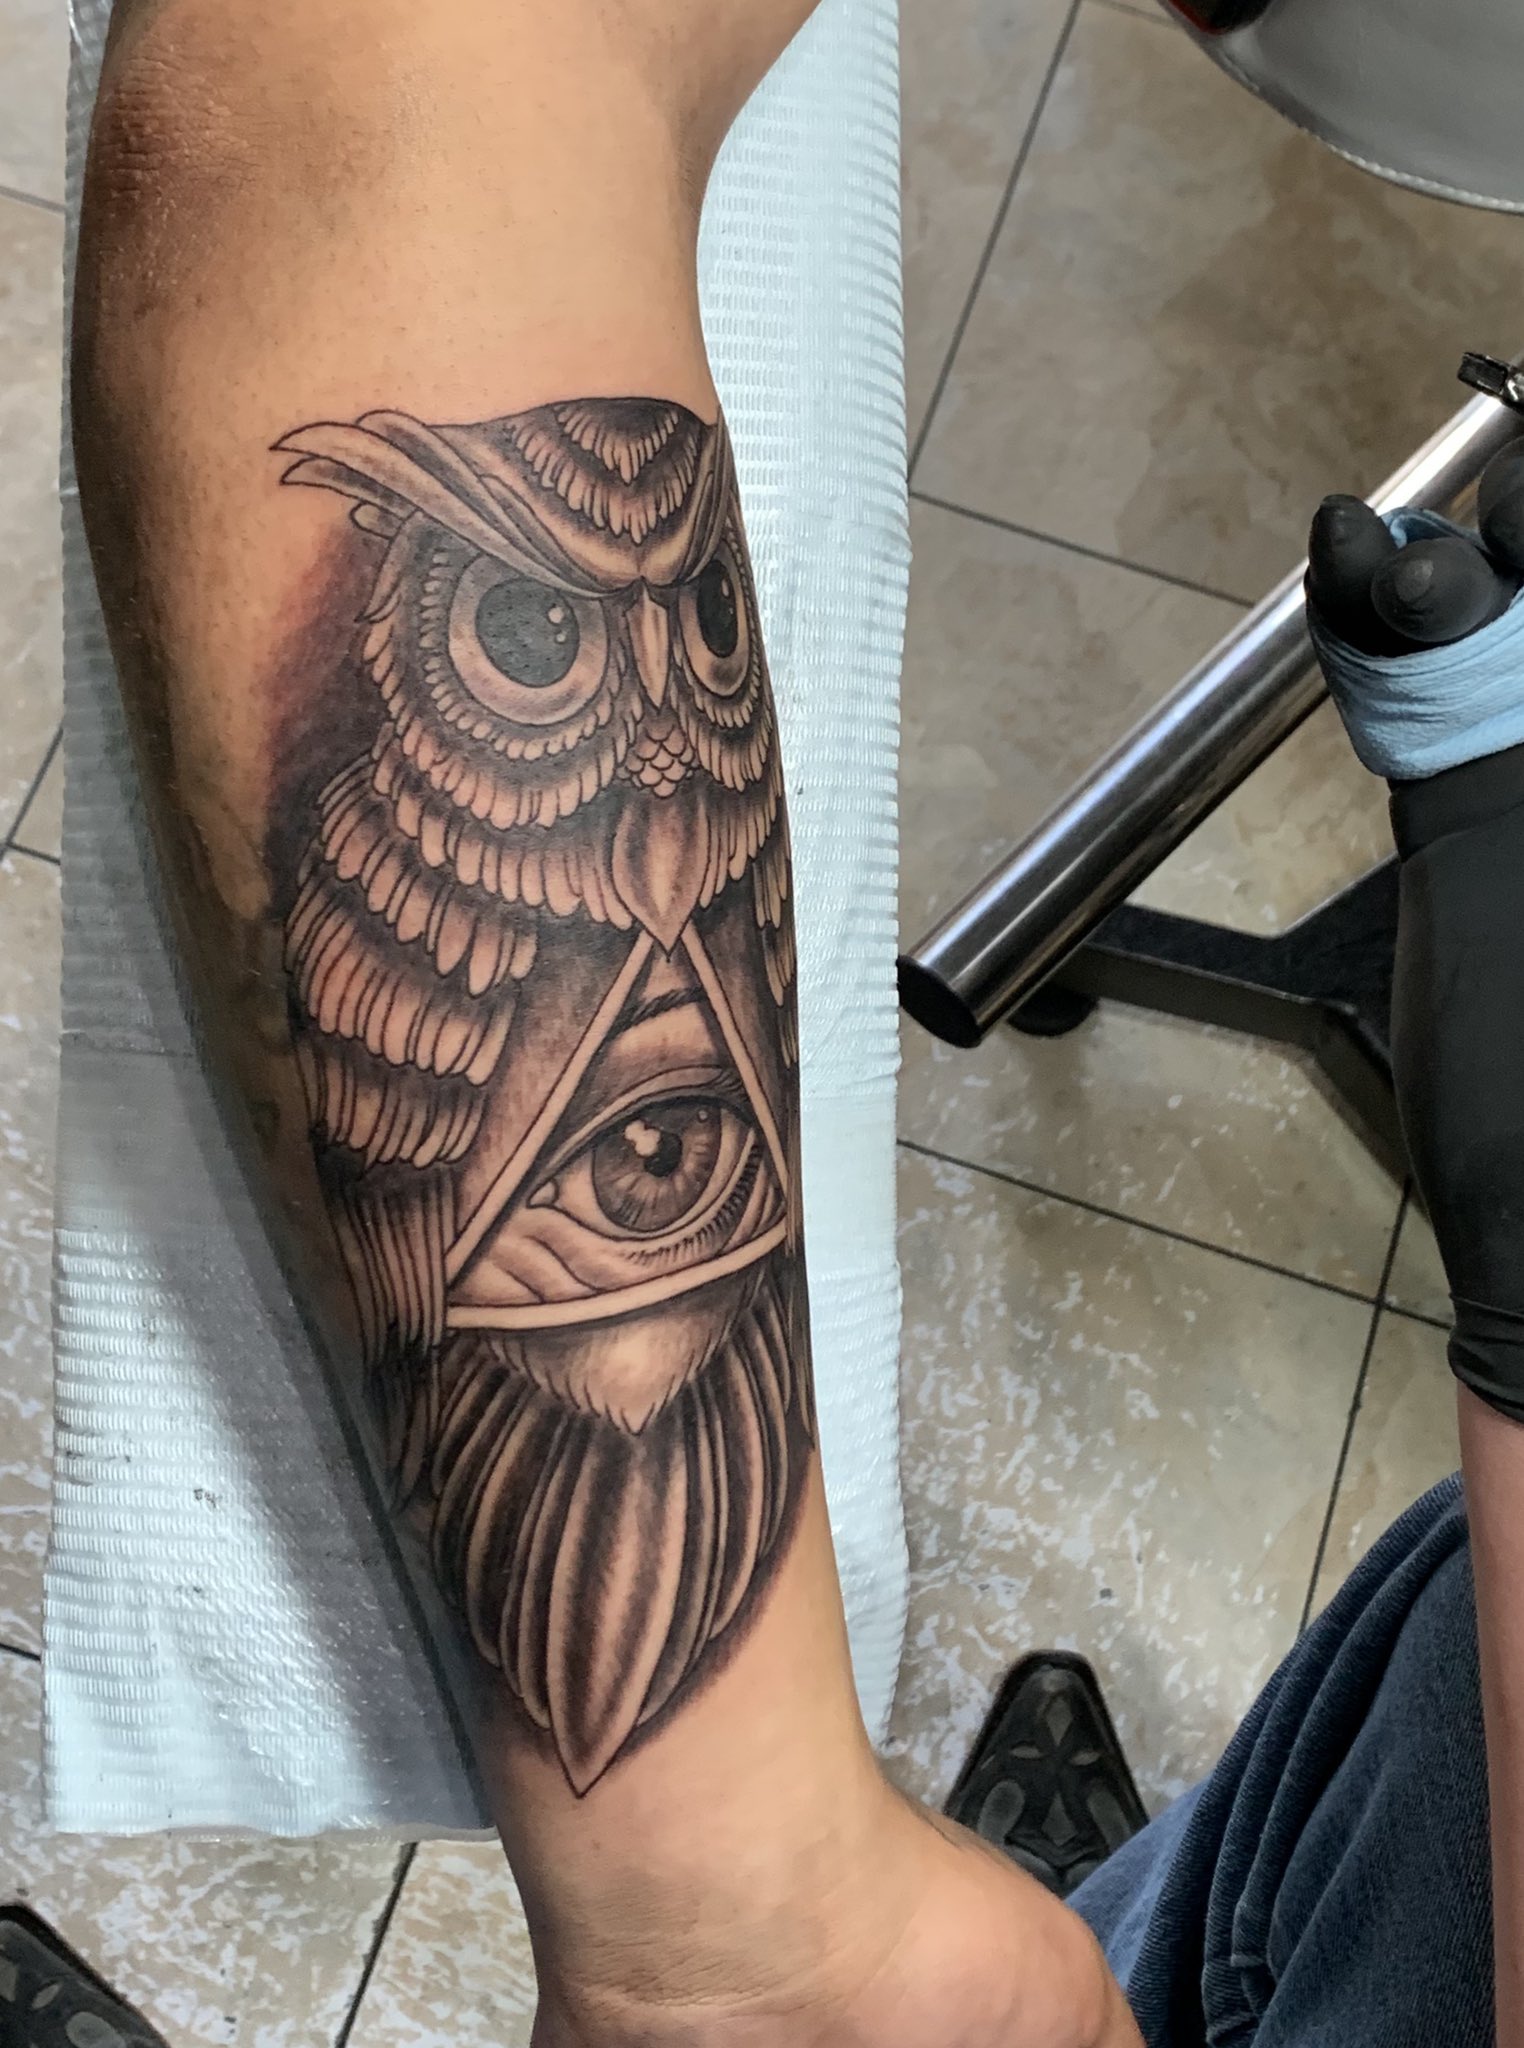 Share 90+ about illuminati owl tattoo super hot .vn